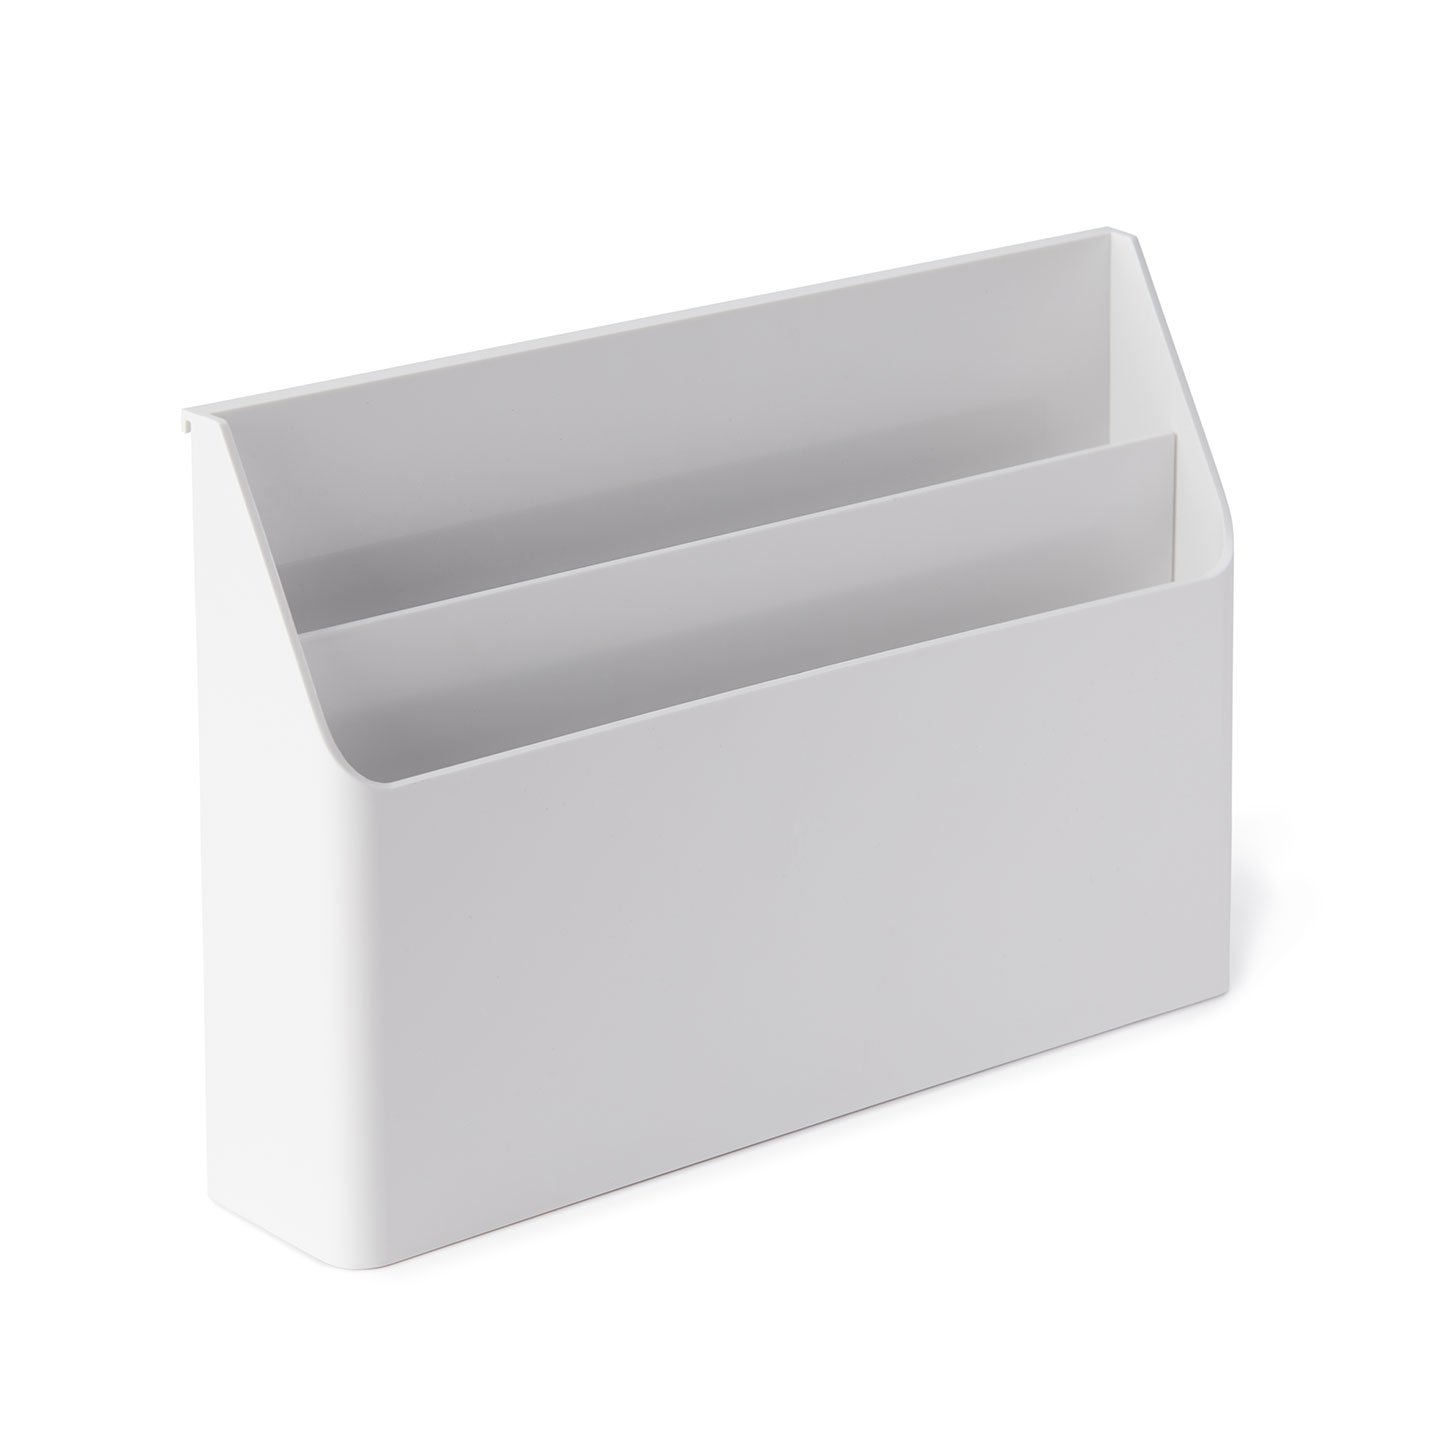 Haworth Belong Work Tools Accessories folder holder in white